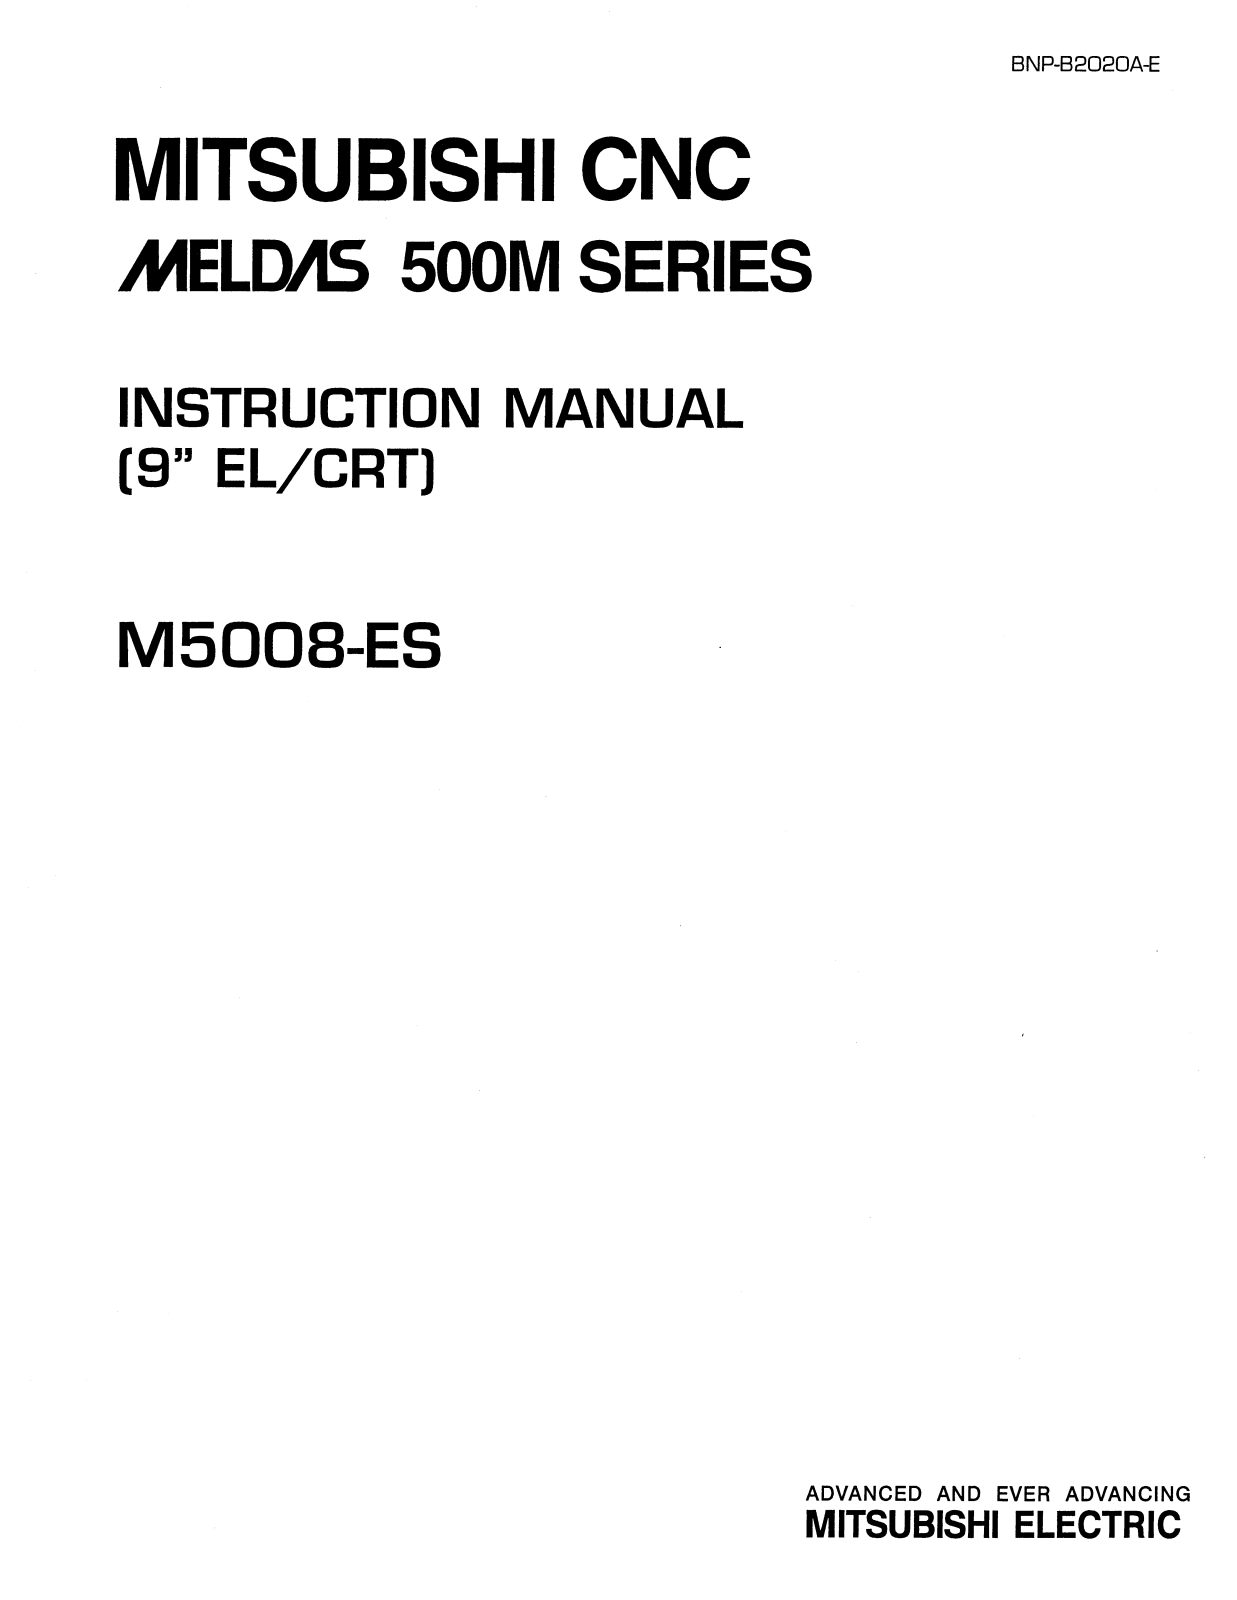 mitsubishi 500M Instruction Manual